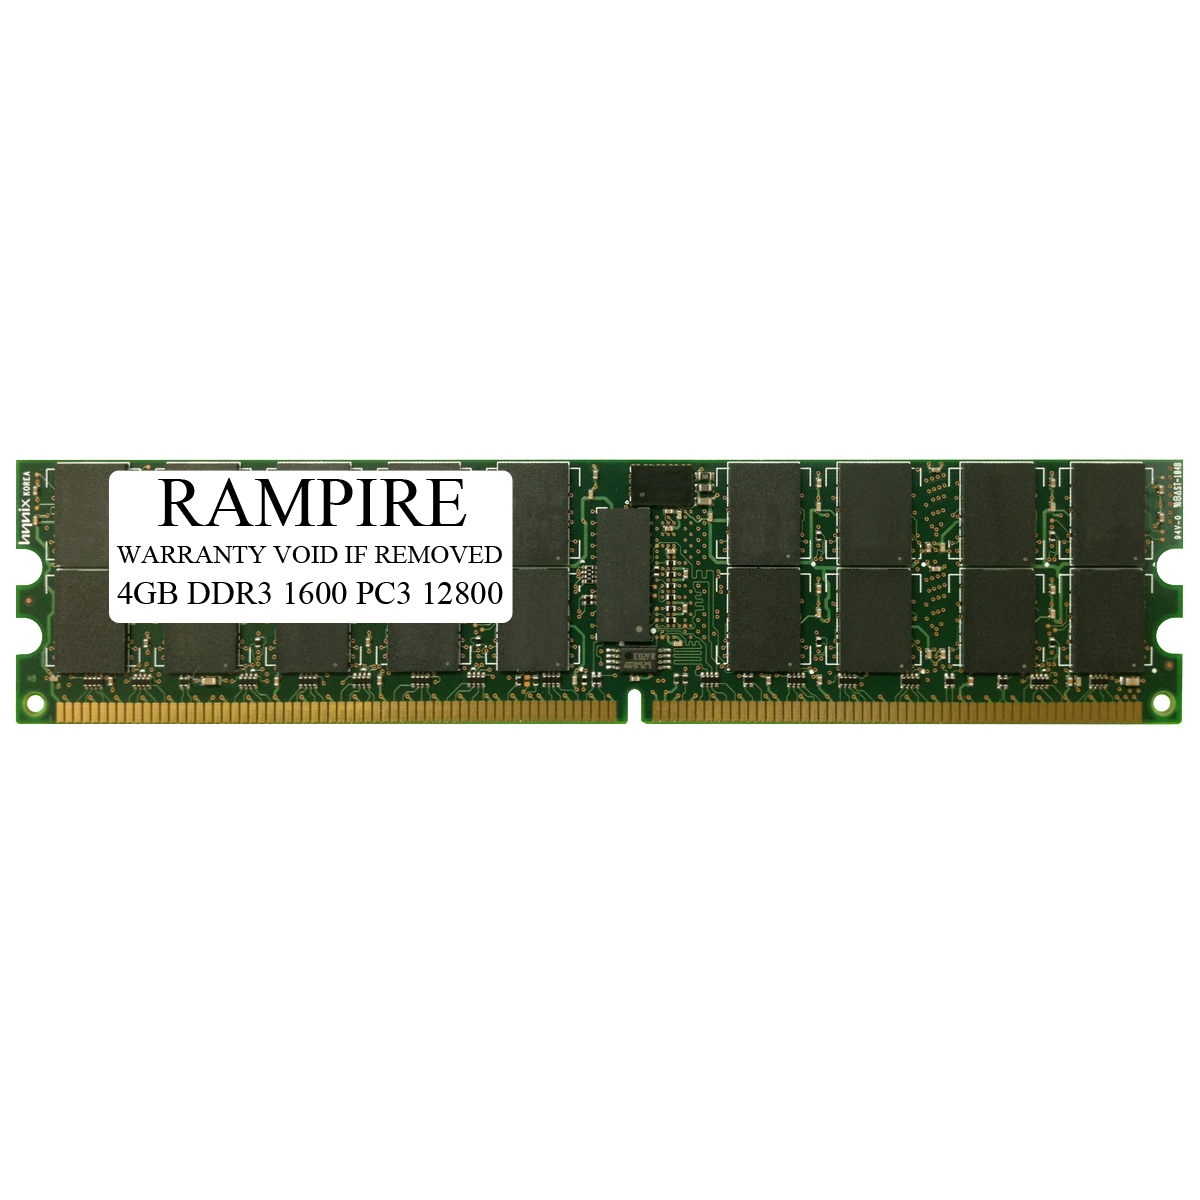 RAMPIRE 4GB DDR3 1600 (PC3 12800) 240-Pin SDRAM 2Rx4 Standard Profile 1.5V ECC Registered Server Memory